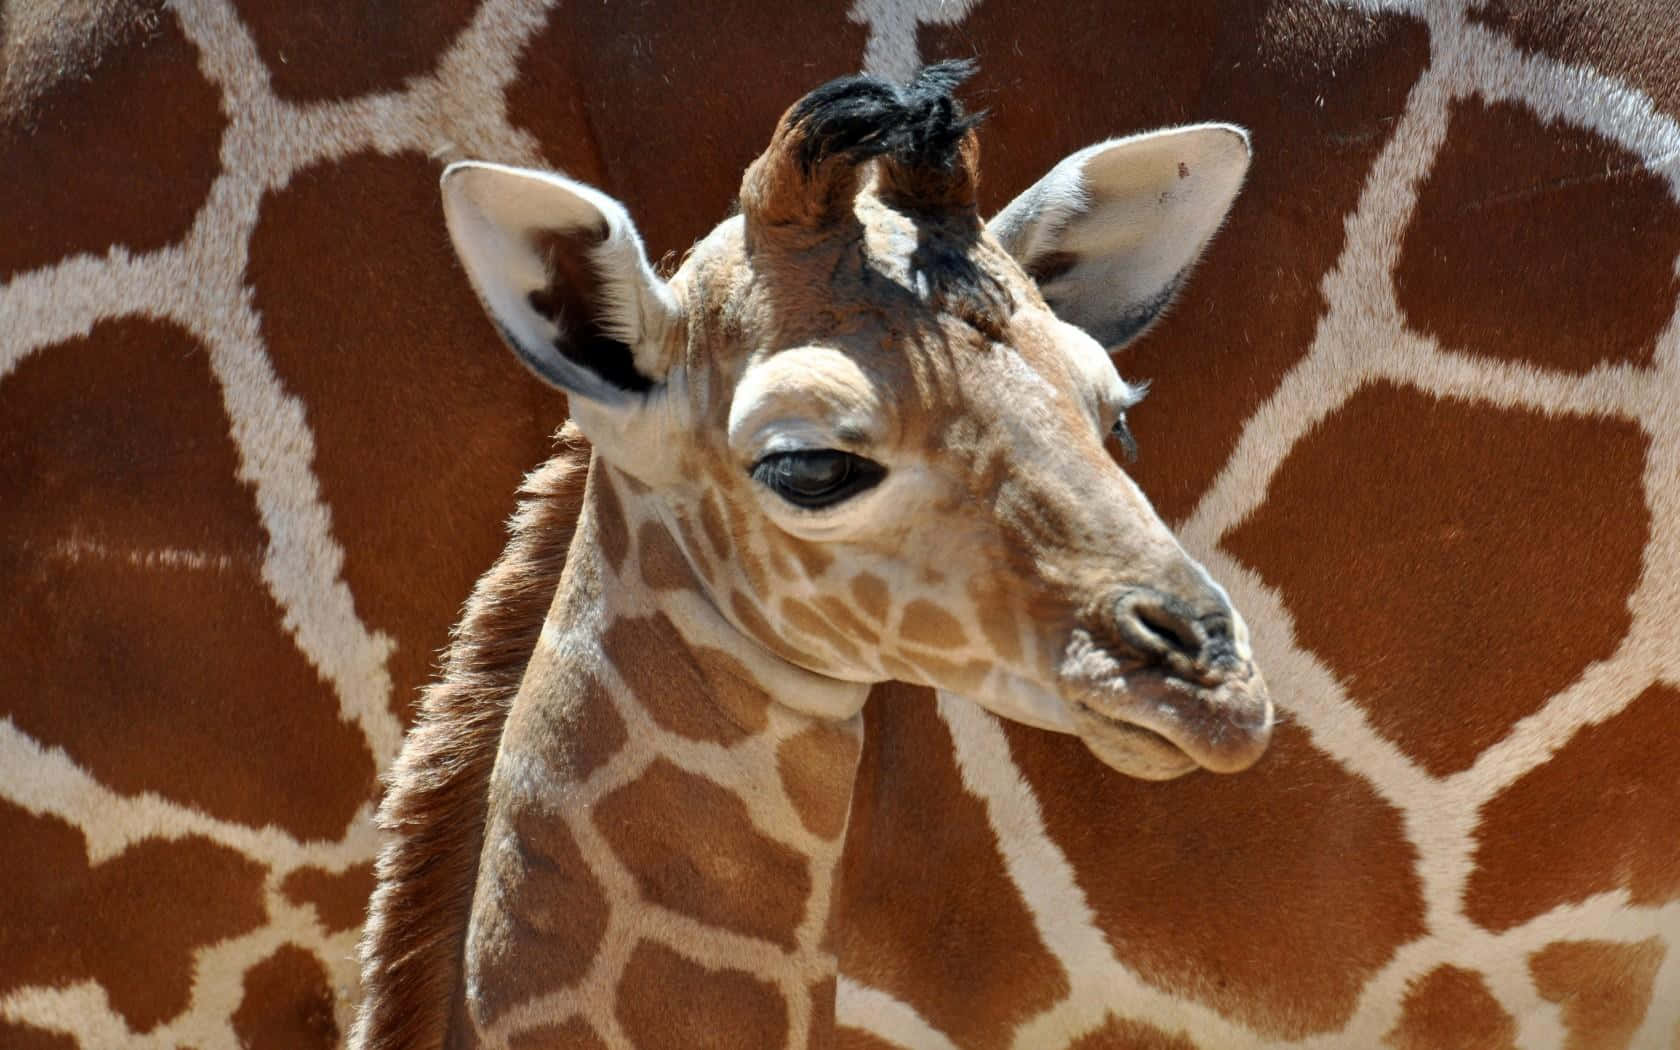 A baby giraffe against a backdrop of lush grass